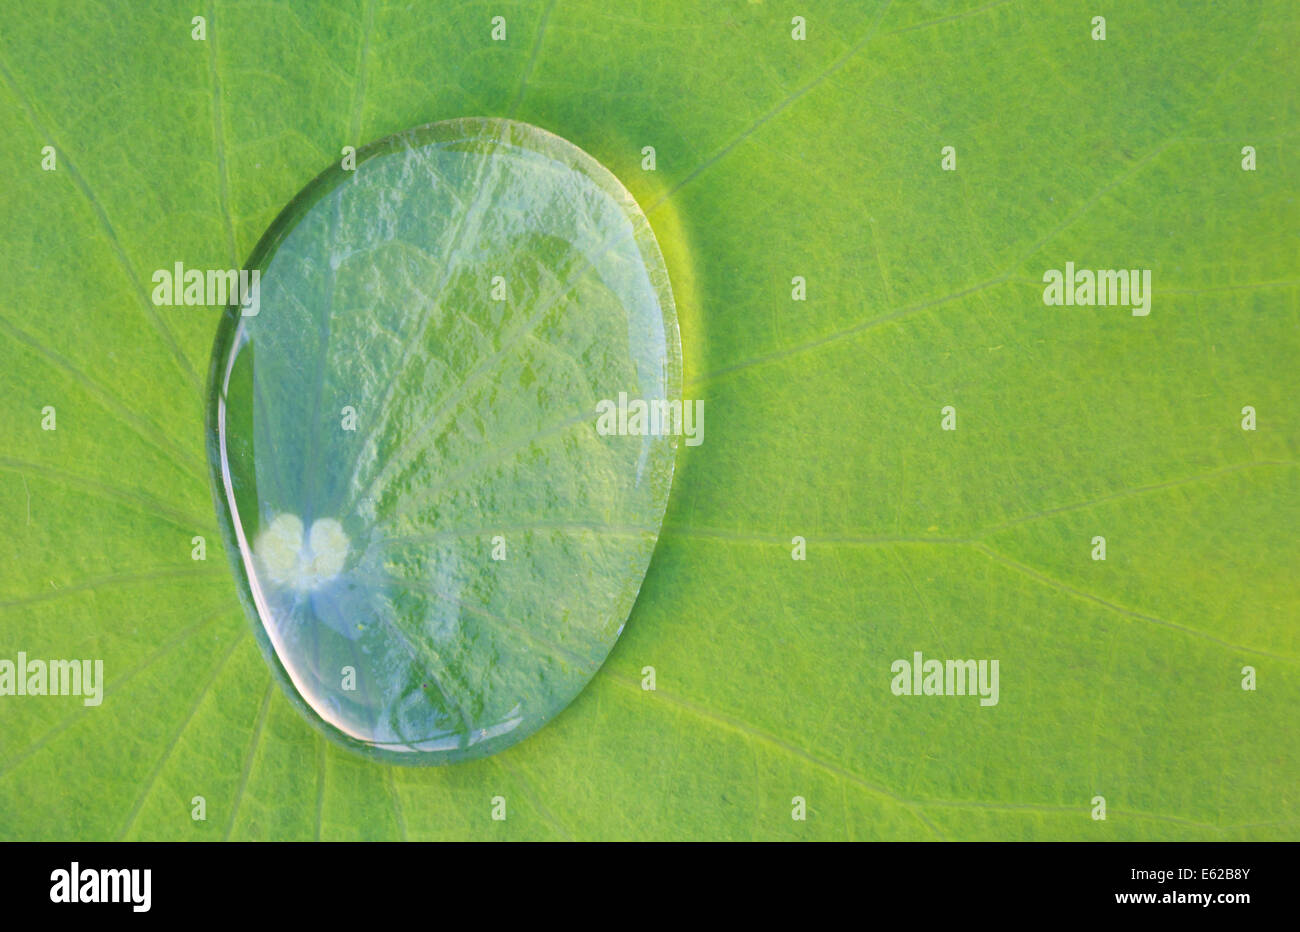 Closeup shot of a rain water drop on a green lotus leaf Stock Photo